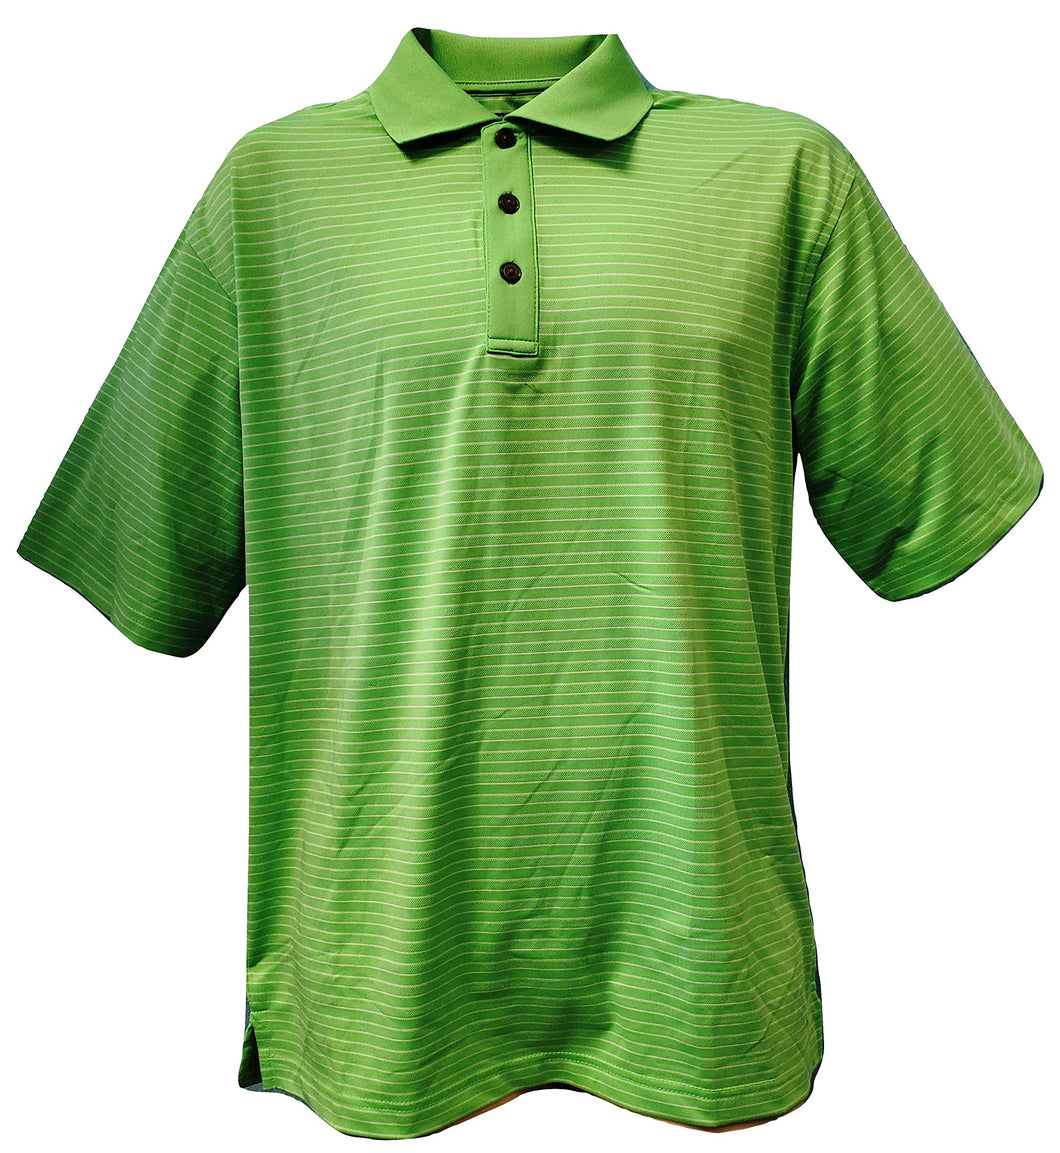 Mens Pin Stripe Polo Shirt (Green, X-Large)